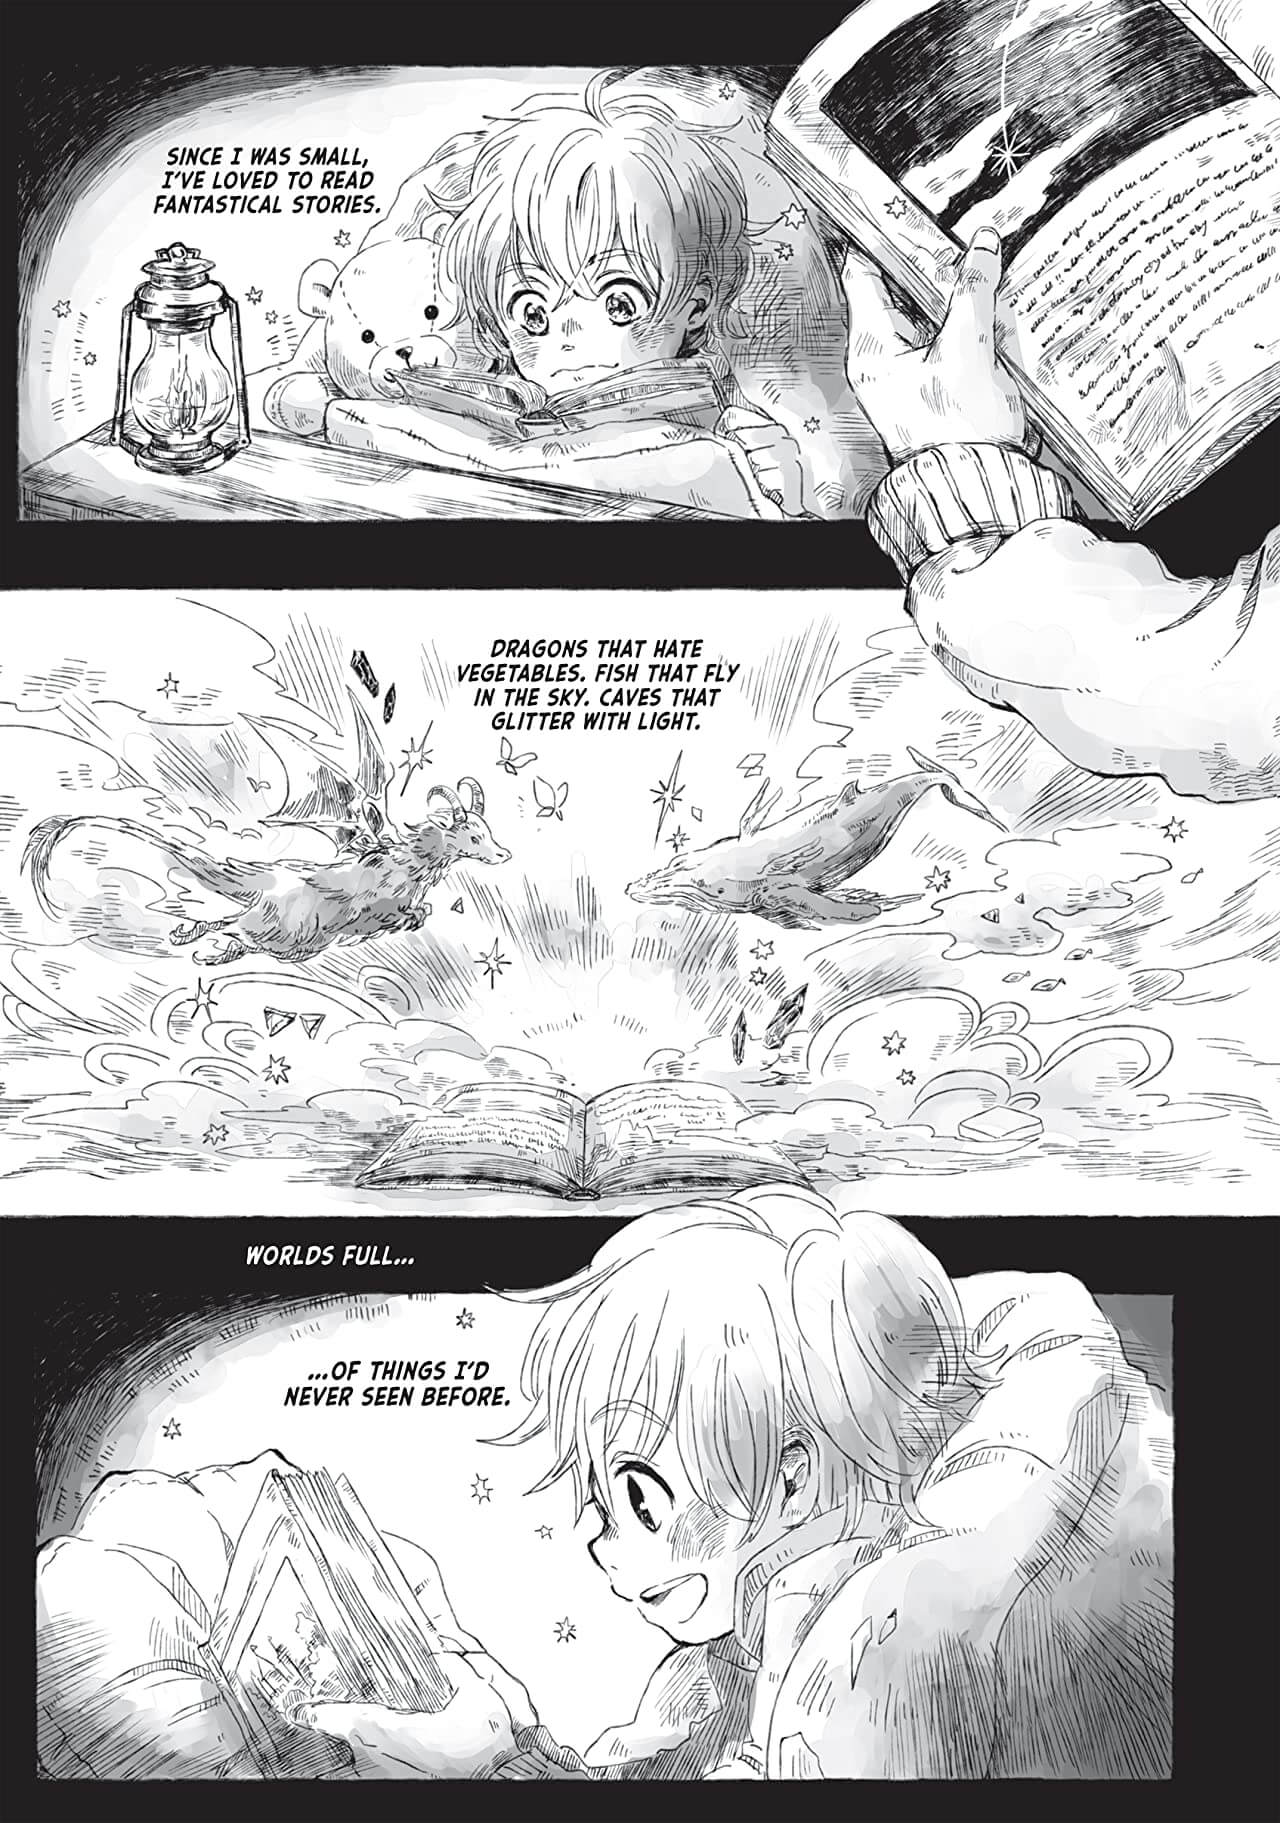 Beyond the Clouds manga sample page